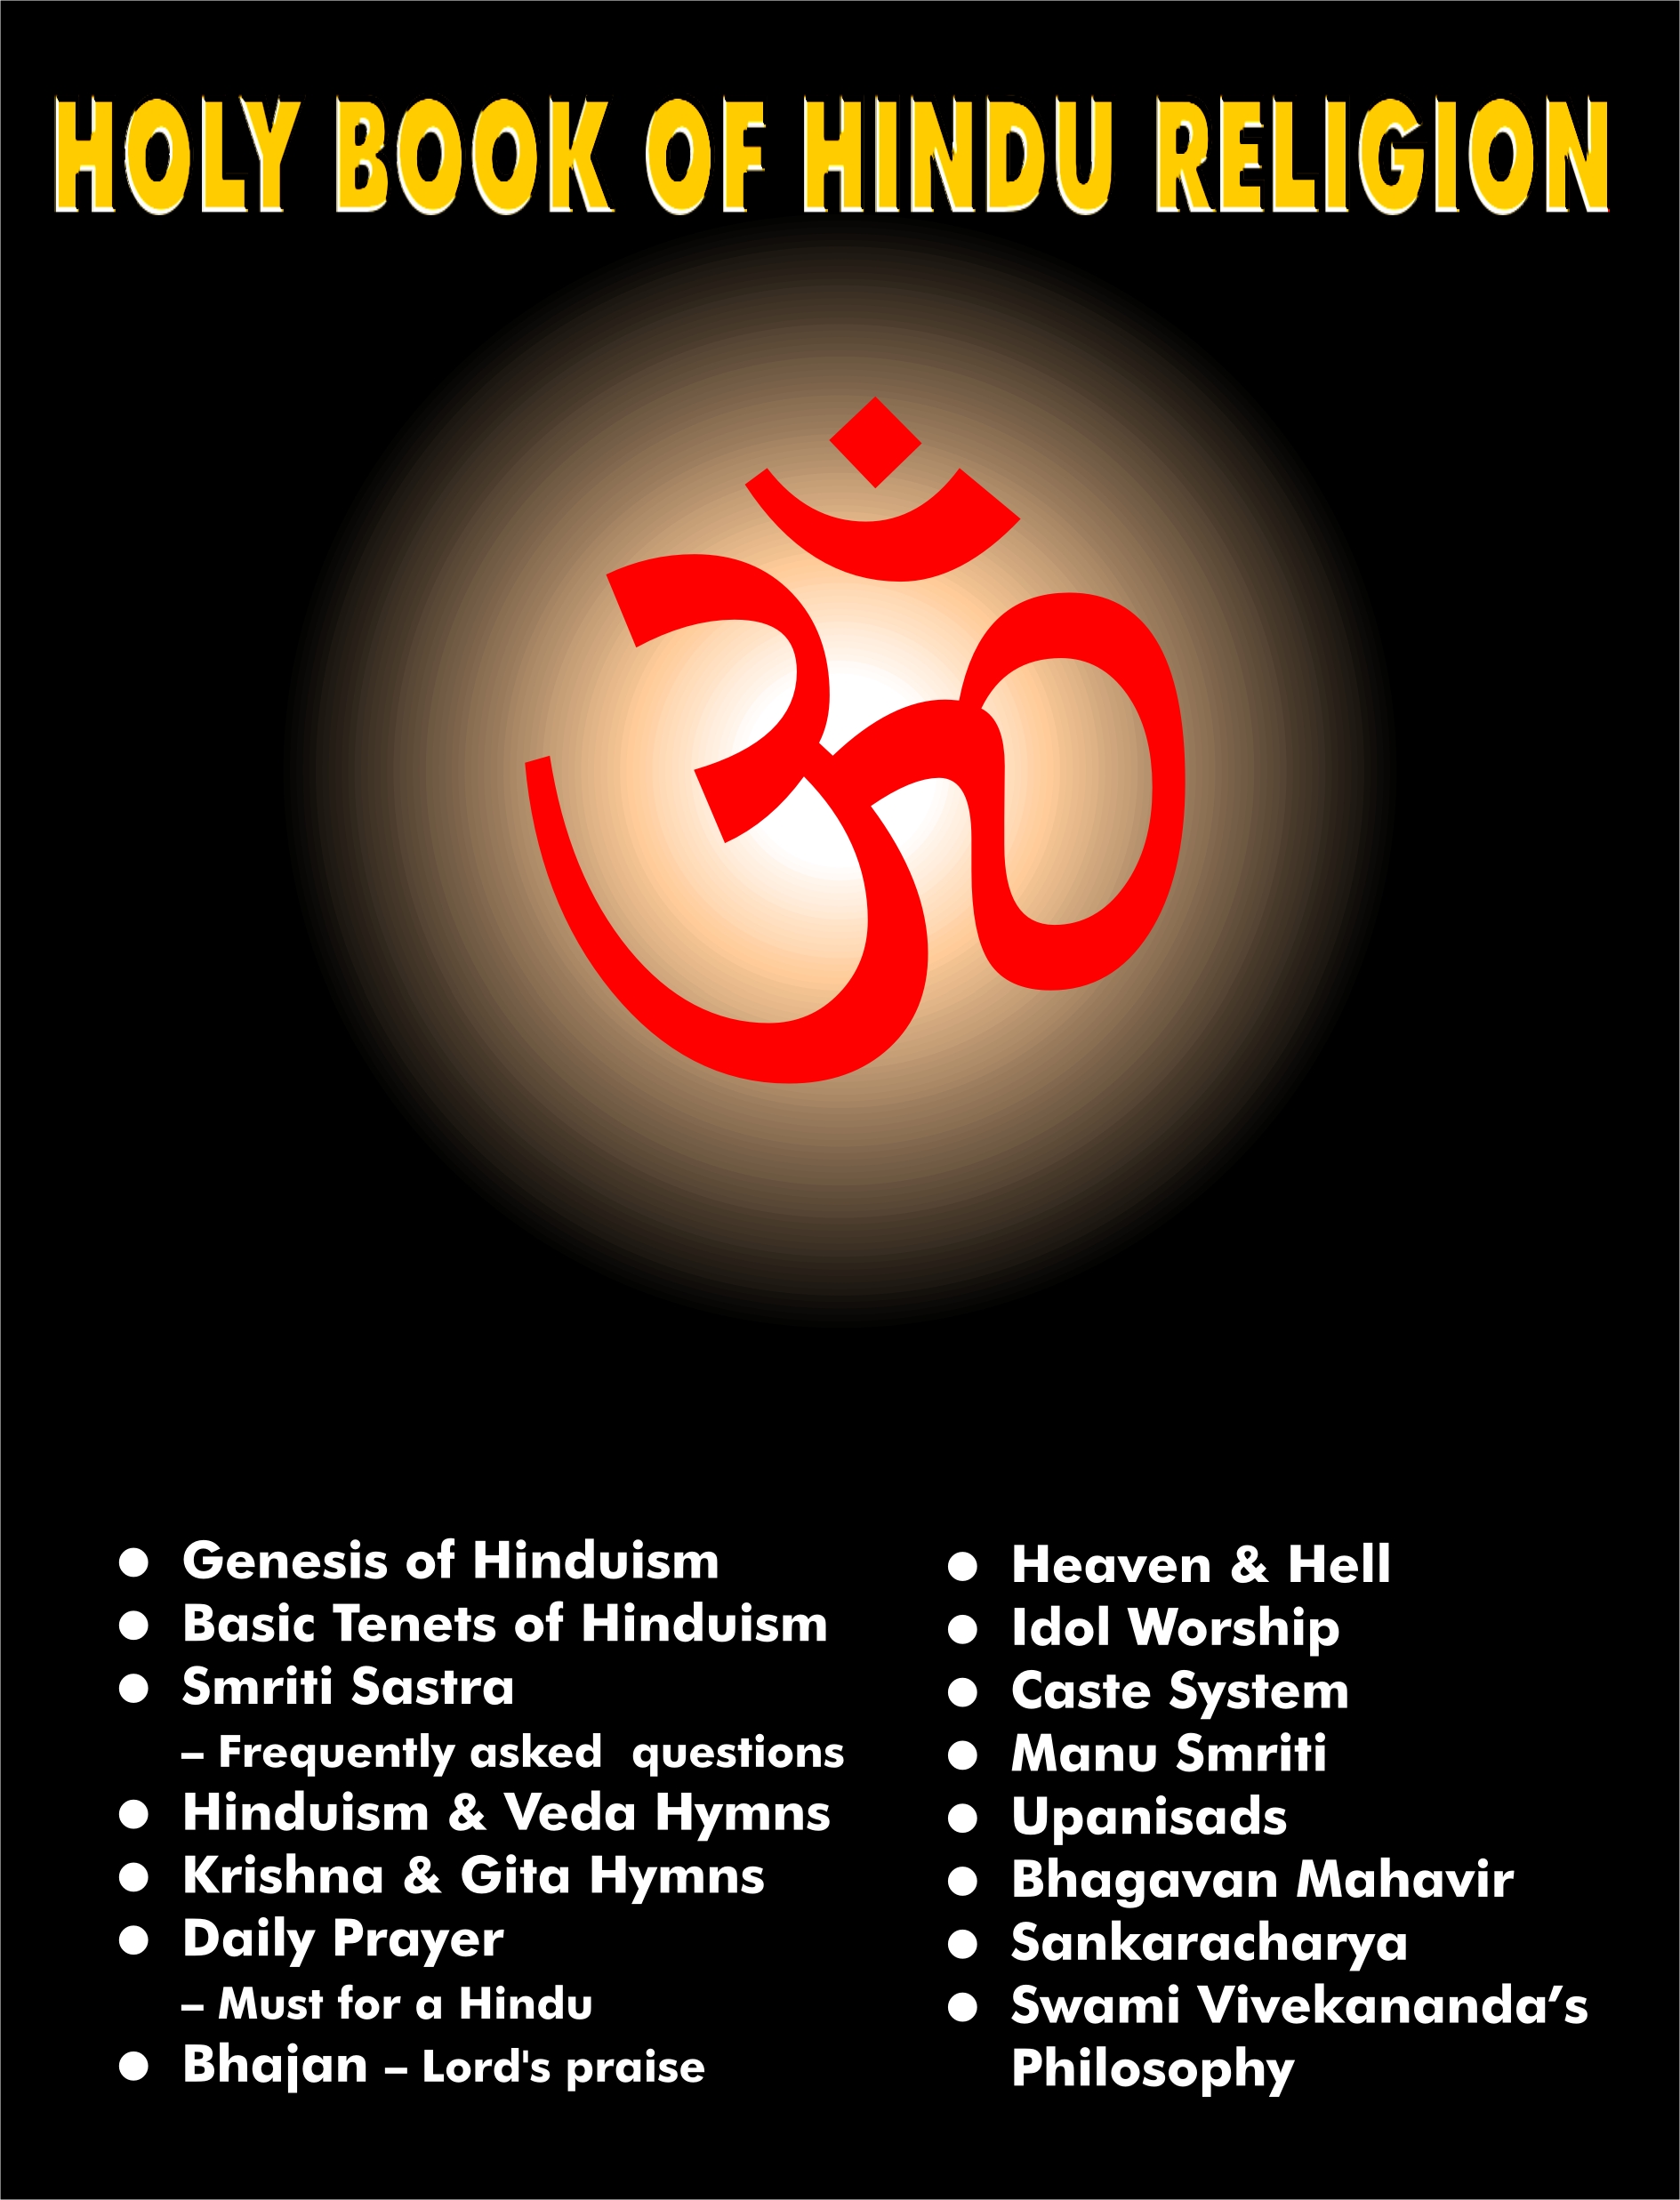 Hindu Religion